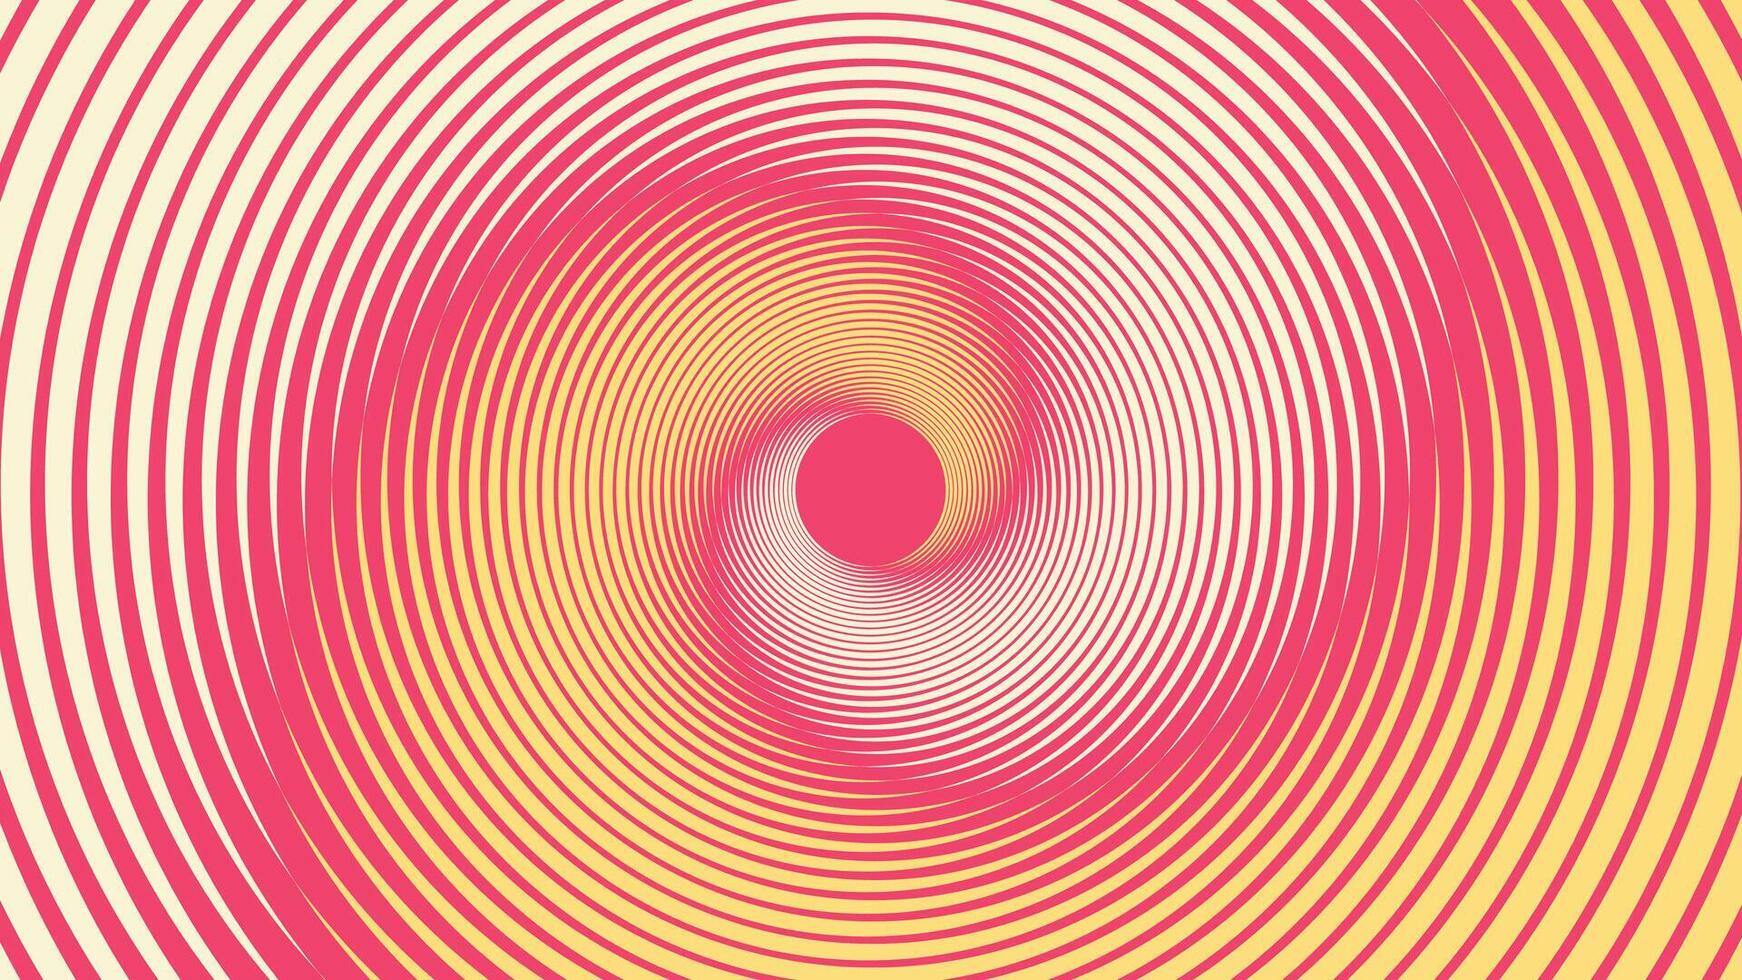 abstract spiraal golvend lijn urgentie draaikolk ronde roze kleur achtergrond. vector